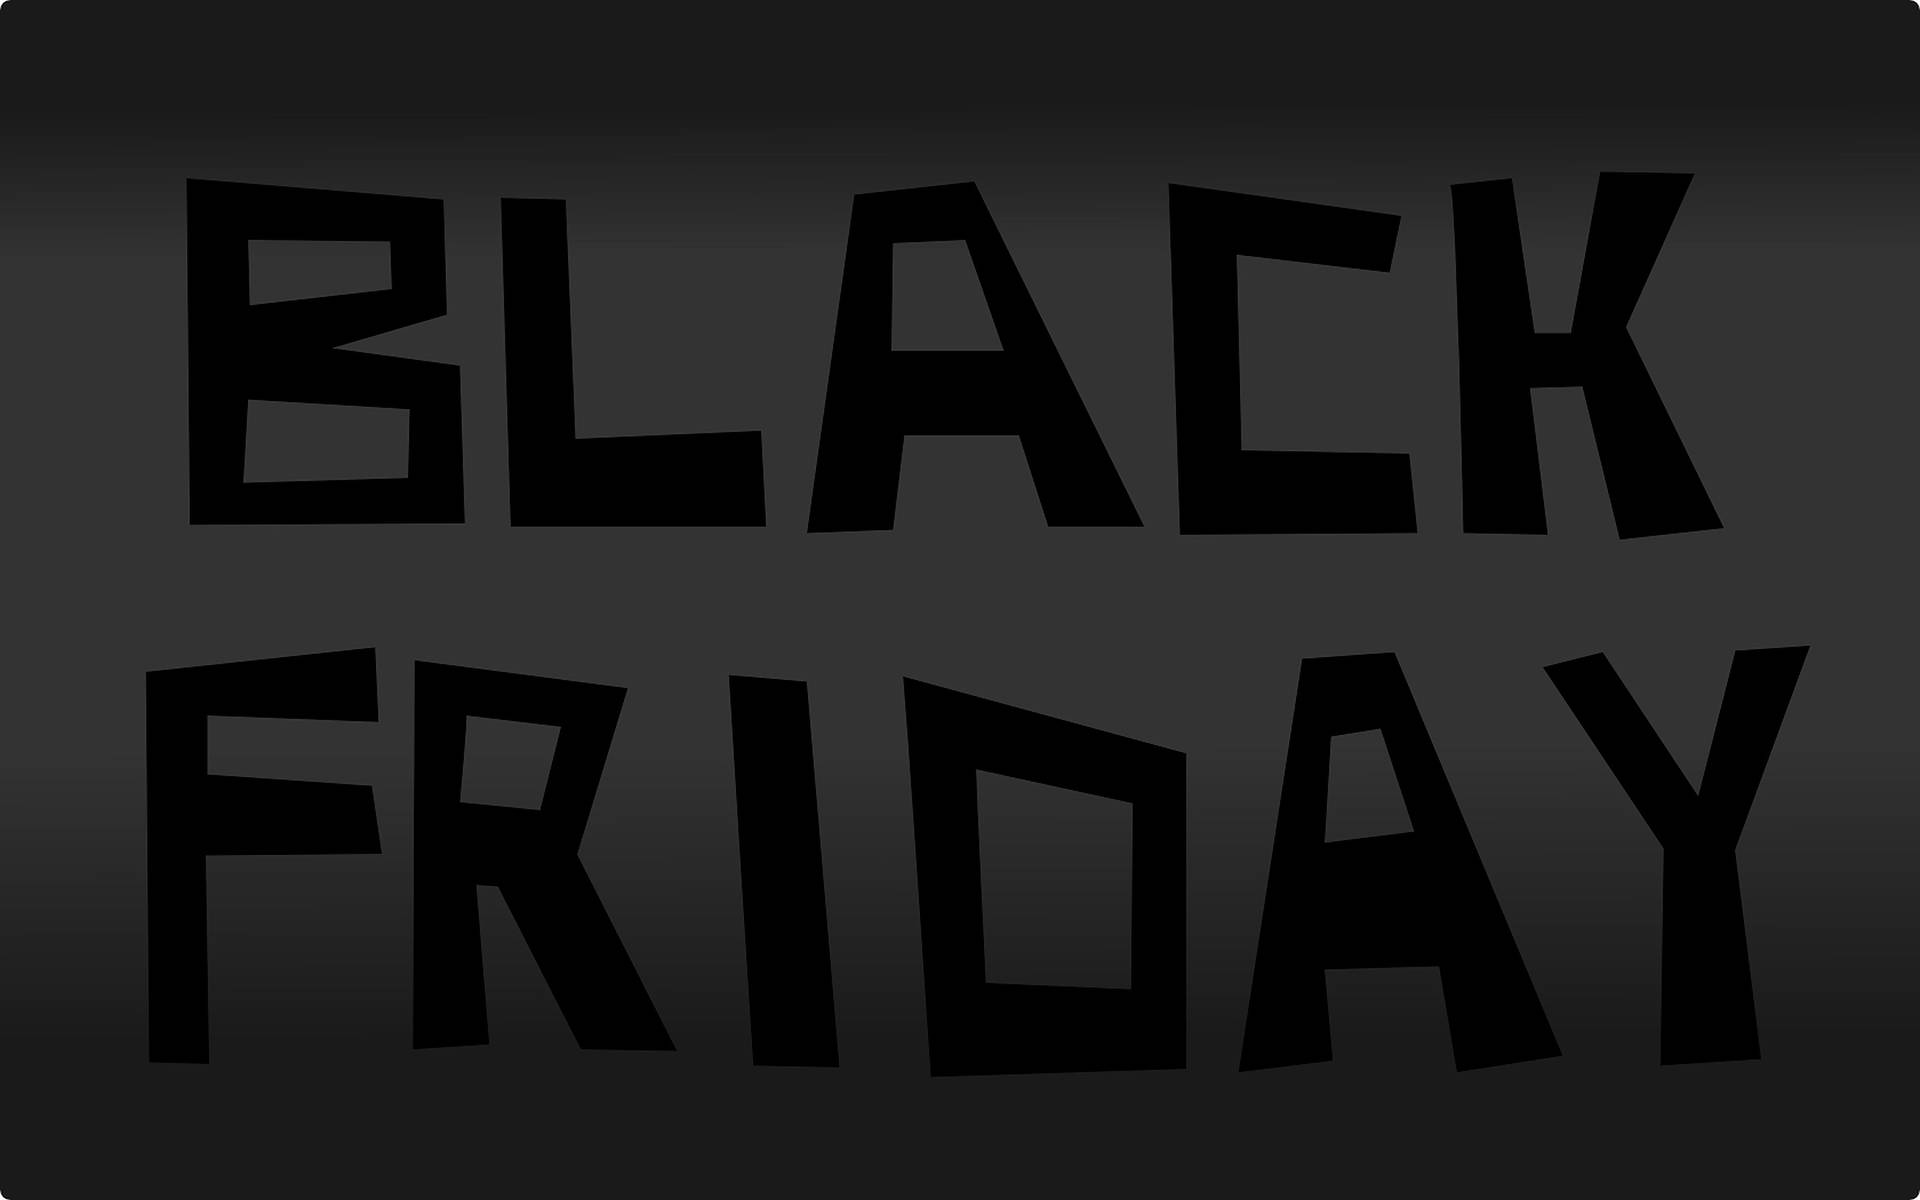 Black Friday Deals Poster